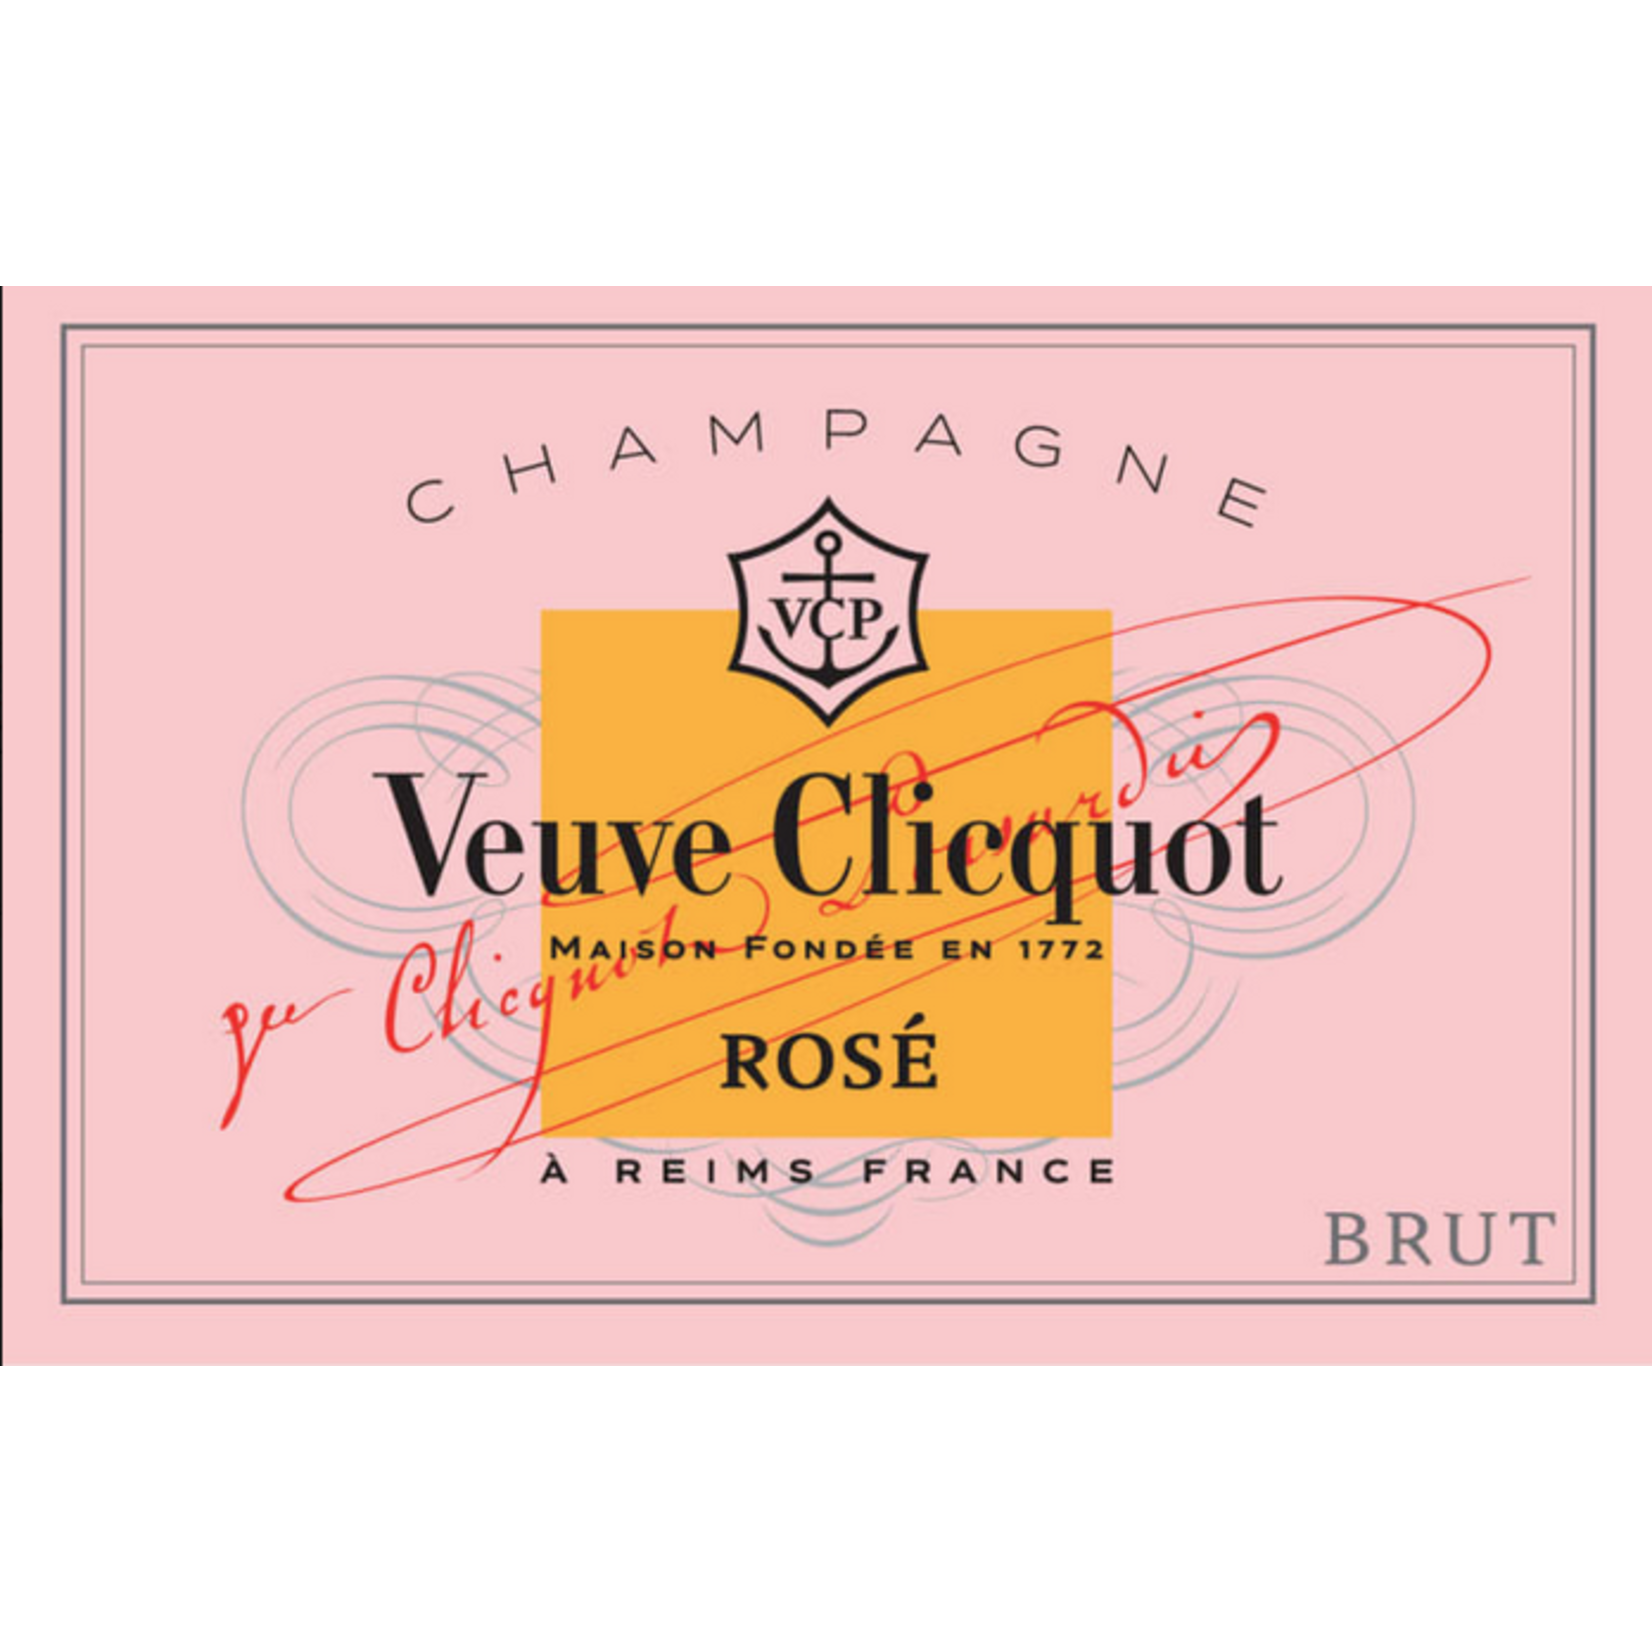 Veuve Clicquot Veuve Clicquot Rose Champagne  France  91pts-WS, 90pts-D